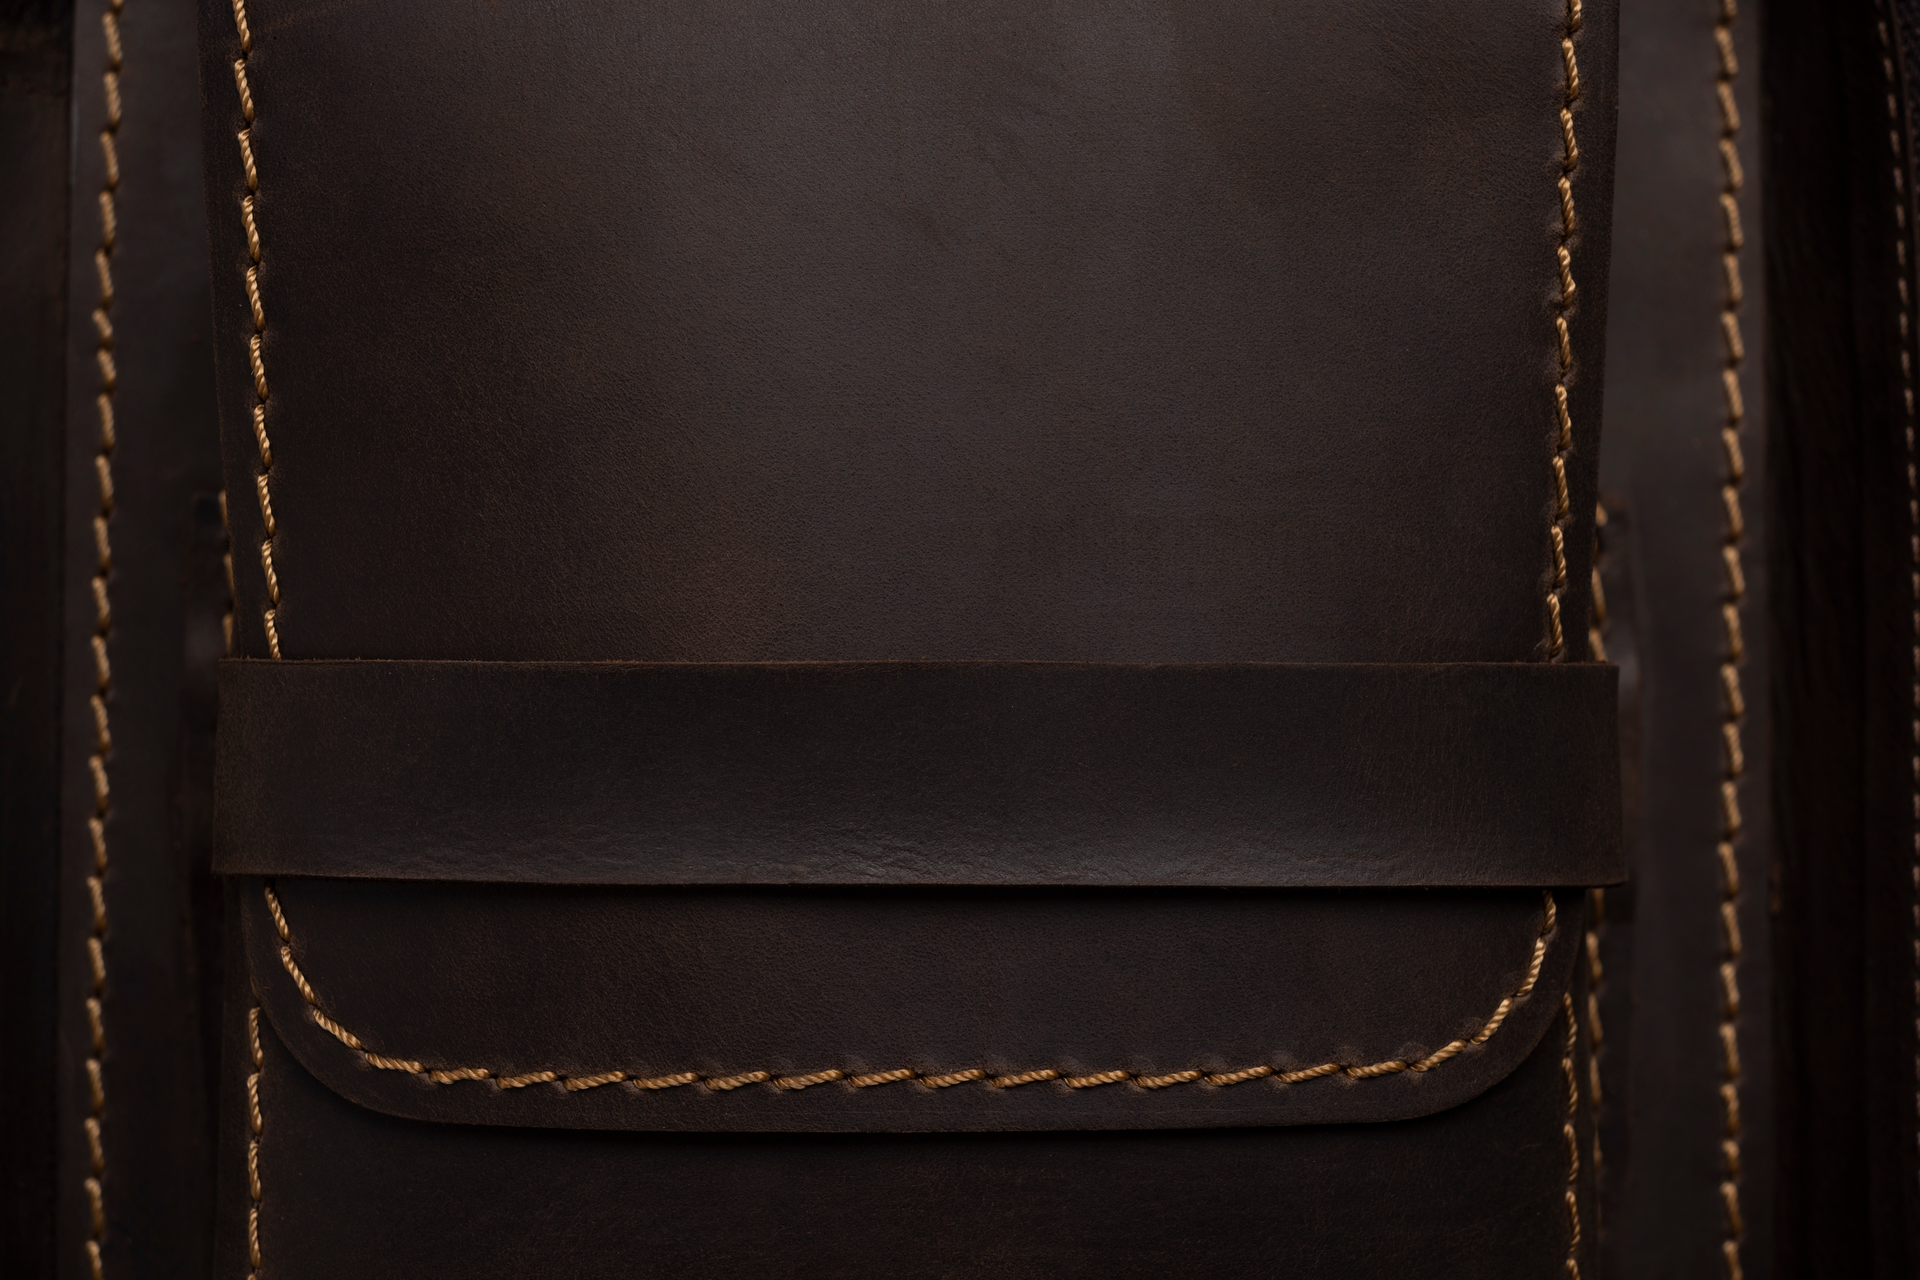 Signature Leather Case in Dark Brown